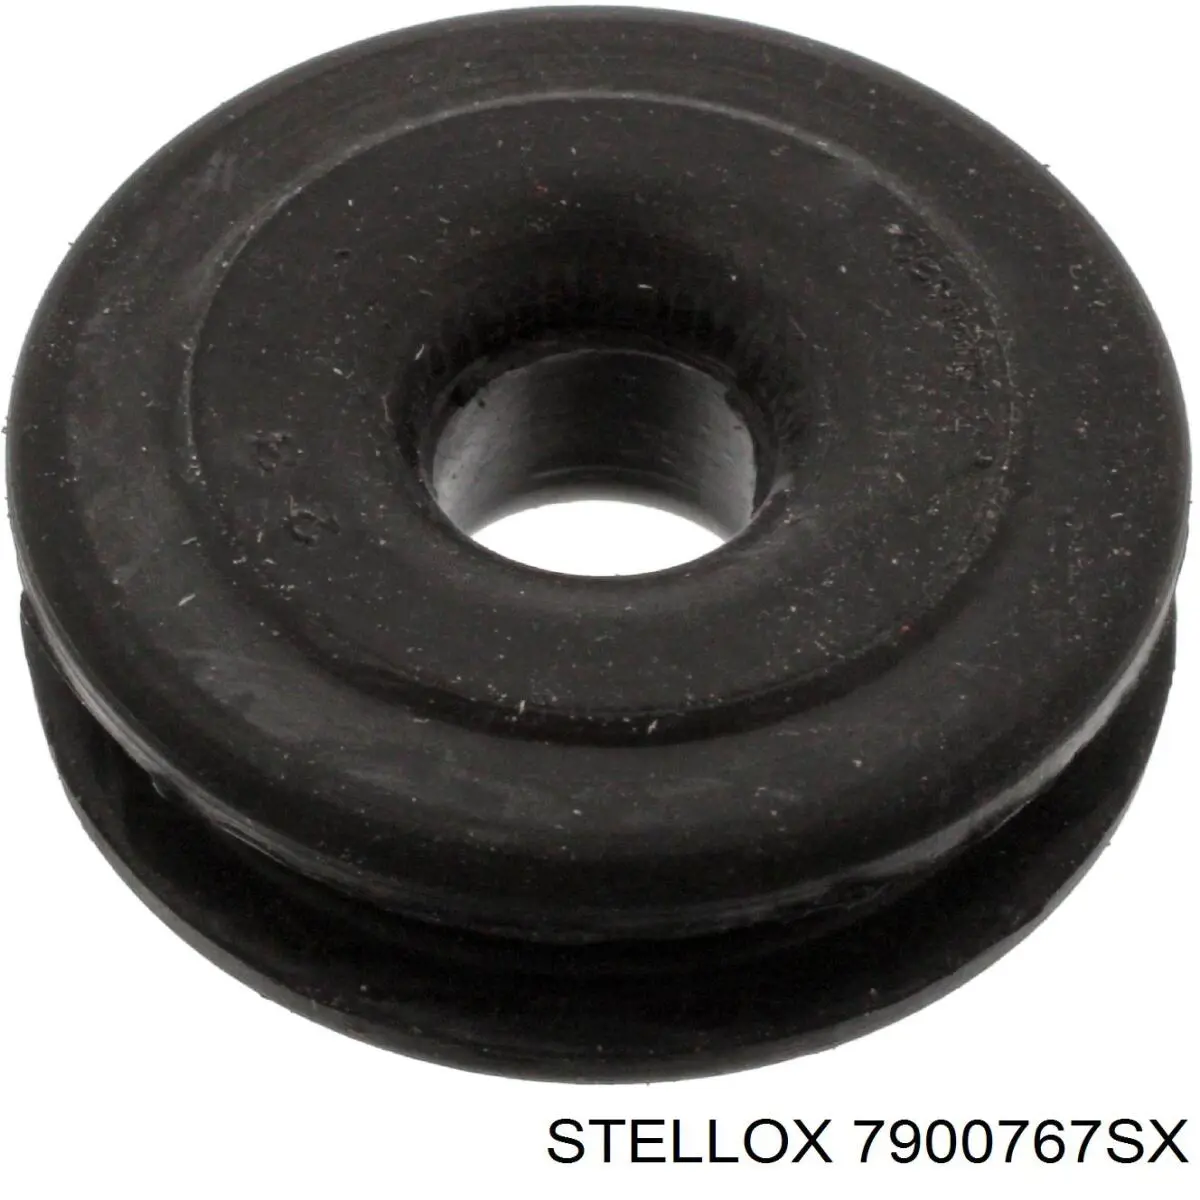 7900767SX Stellox casquillo de barra estabilizadora trasera